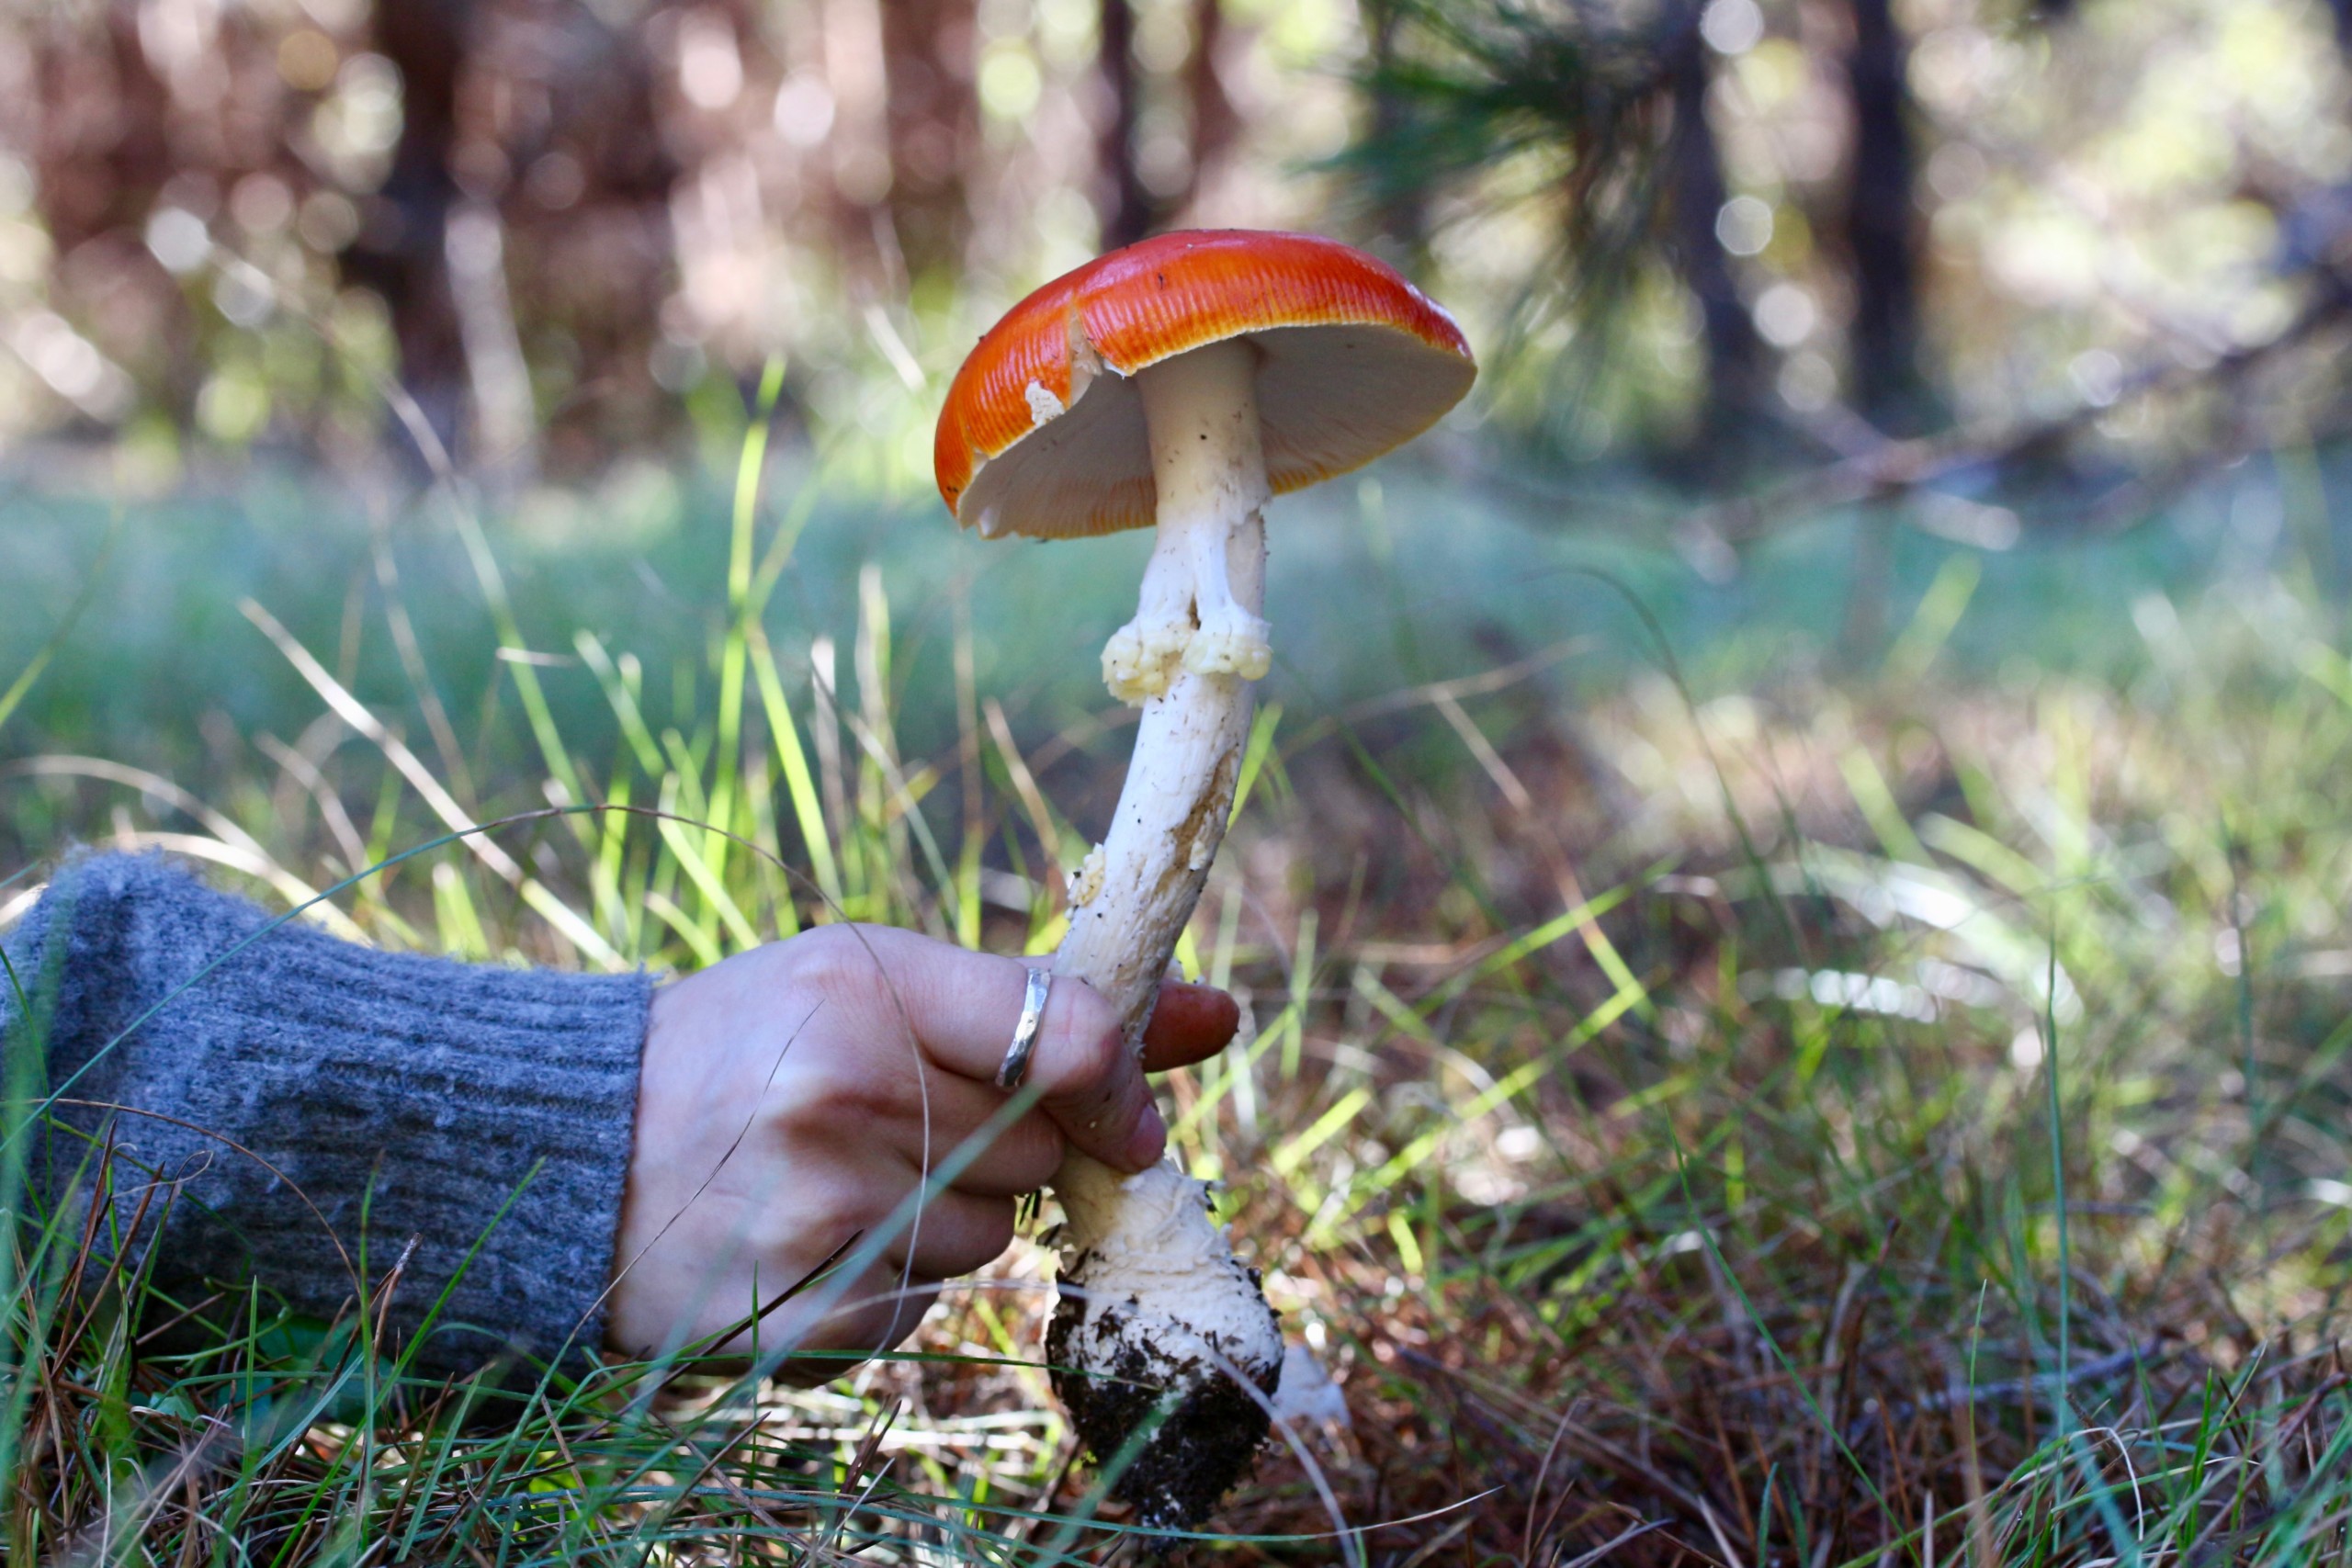 Mushroom Dehydrators - Bay Area Mycological Society